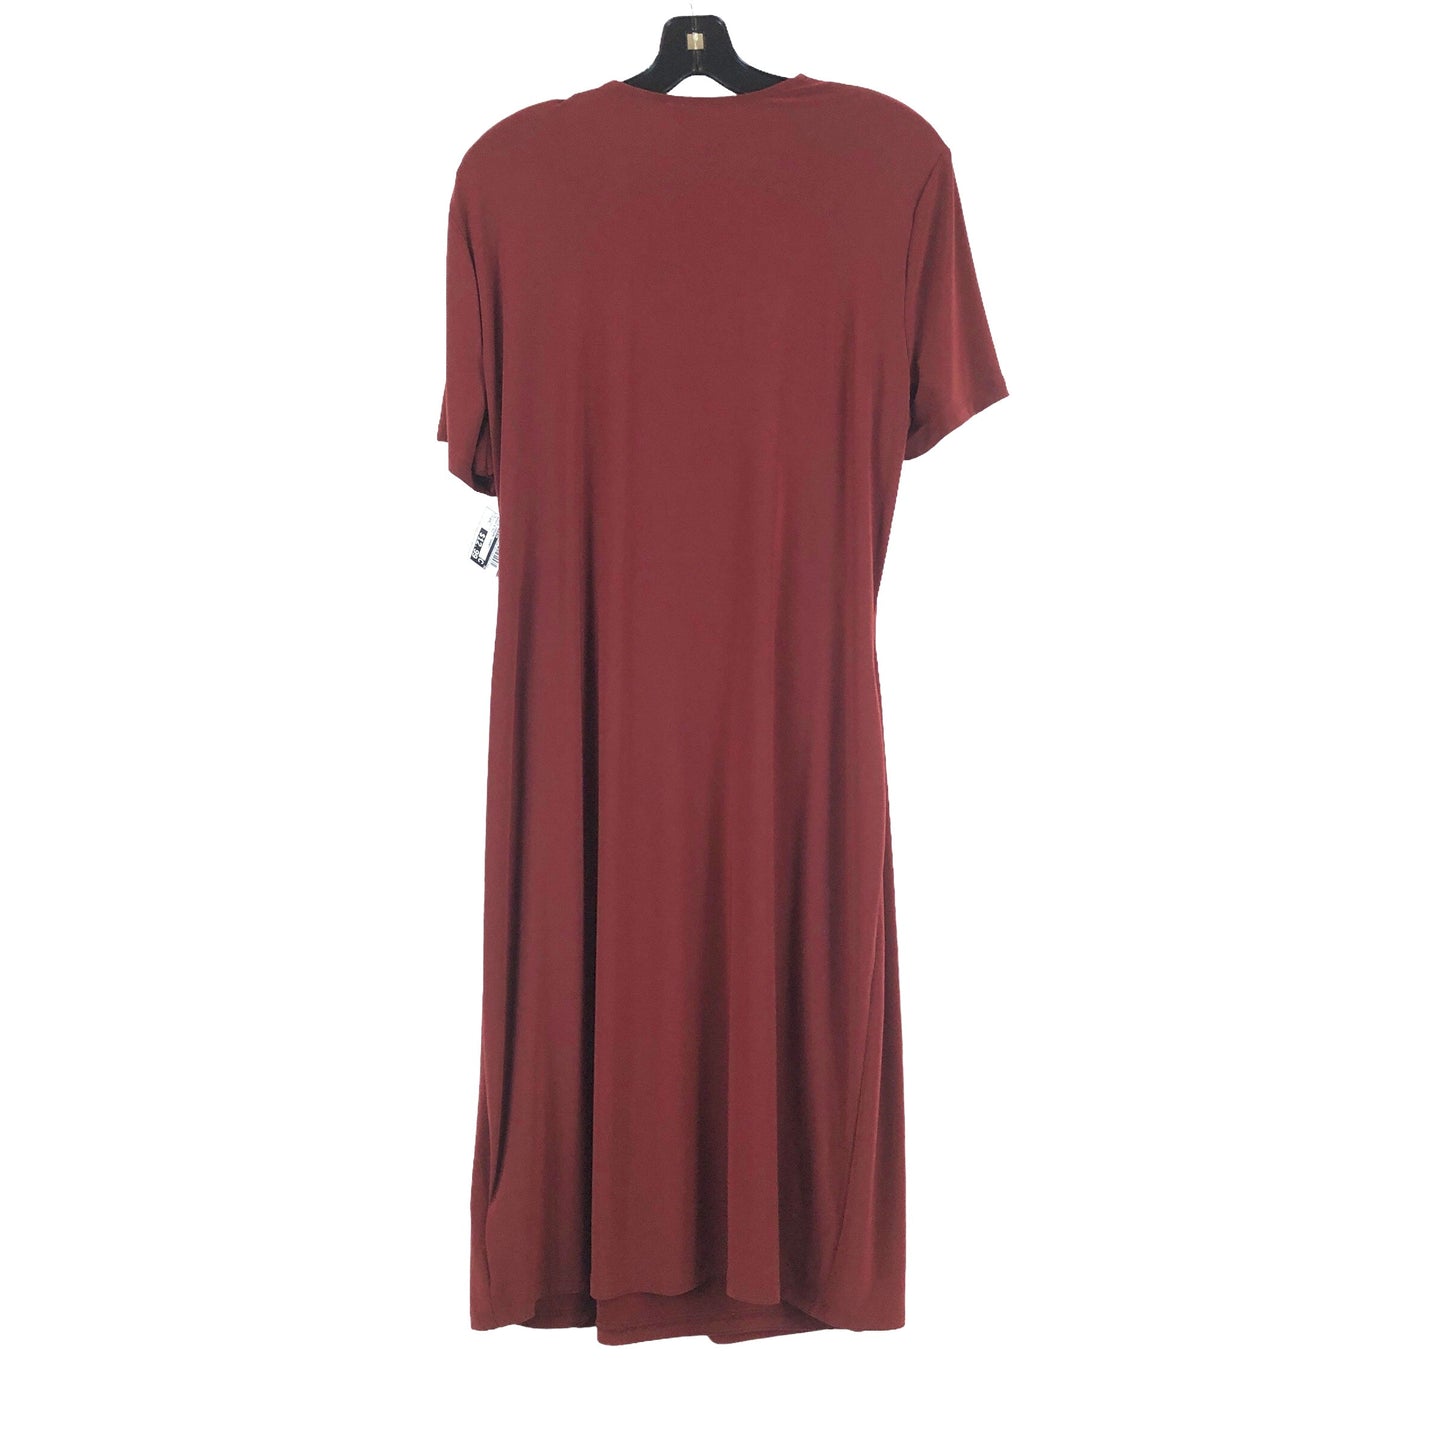 Dress Casual Short By Anne Klein  Size: Xxl